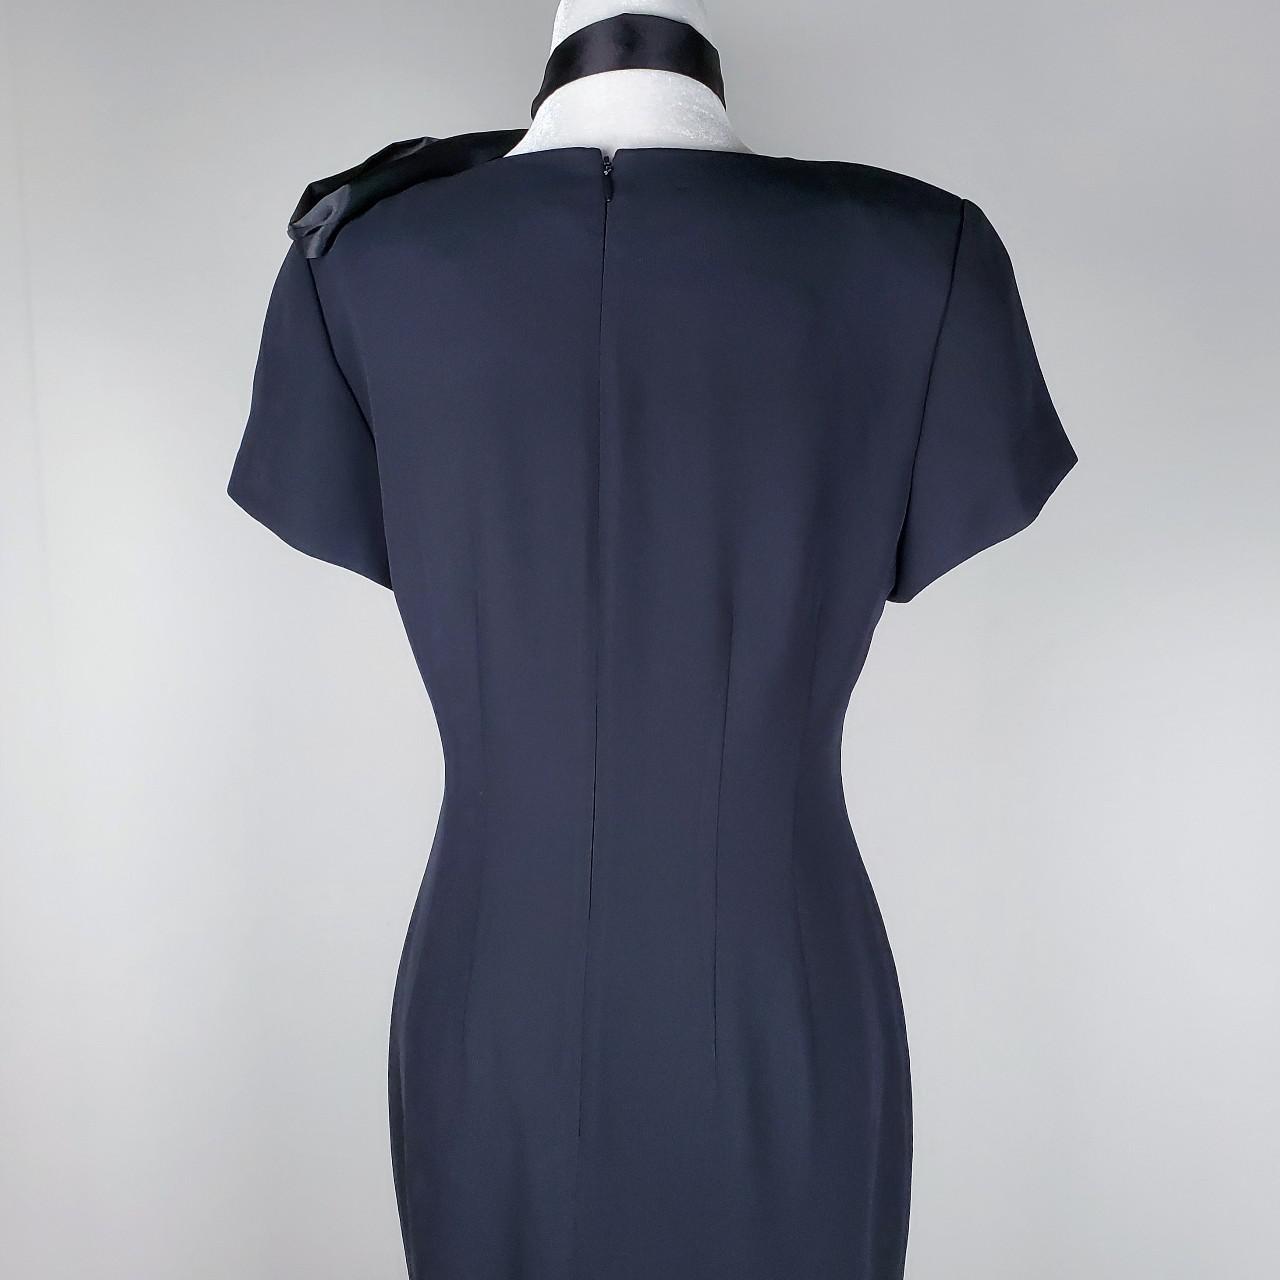 Product Image 3 - Classic Black Dress | Vintage